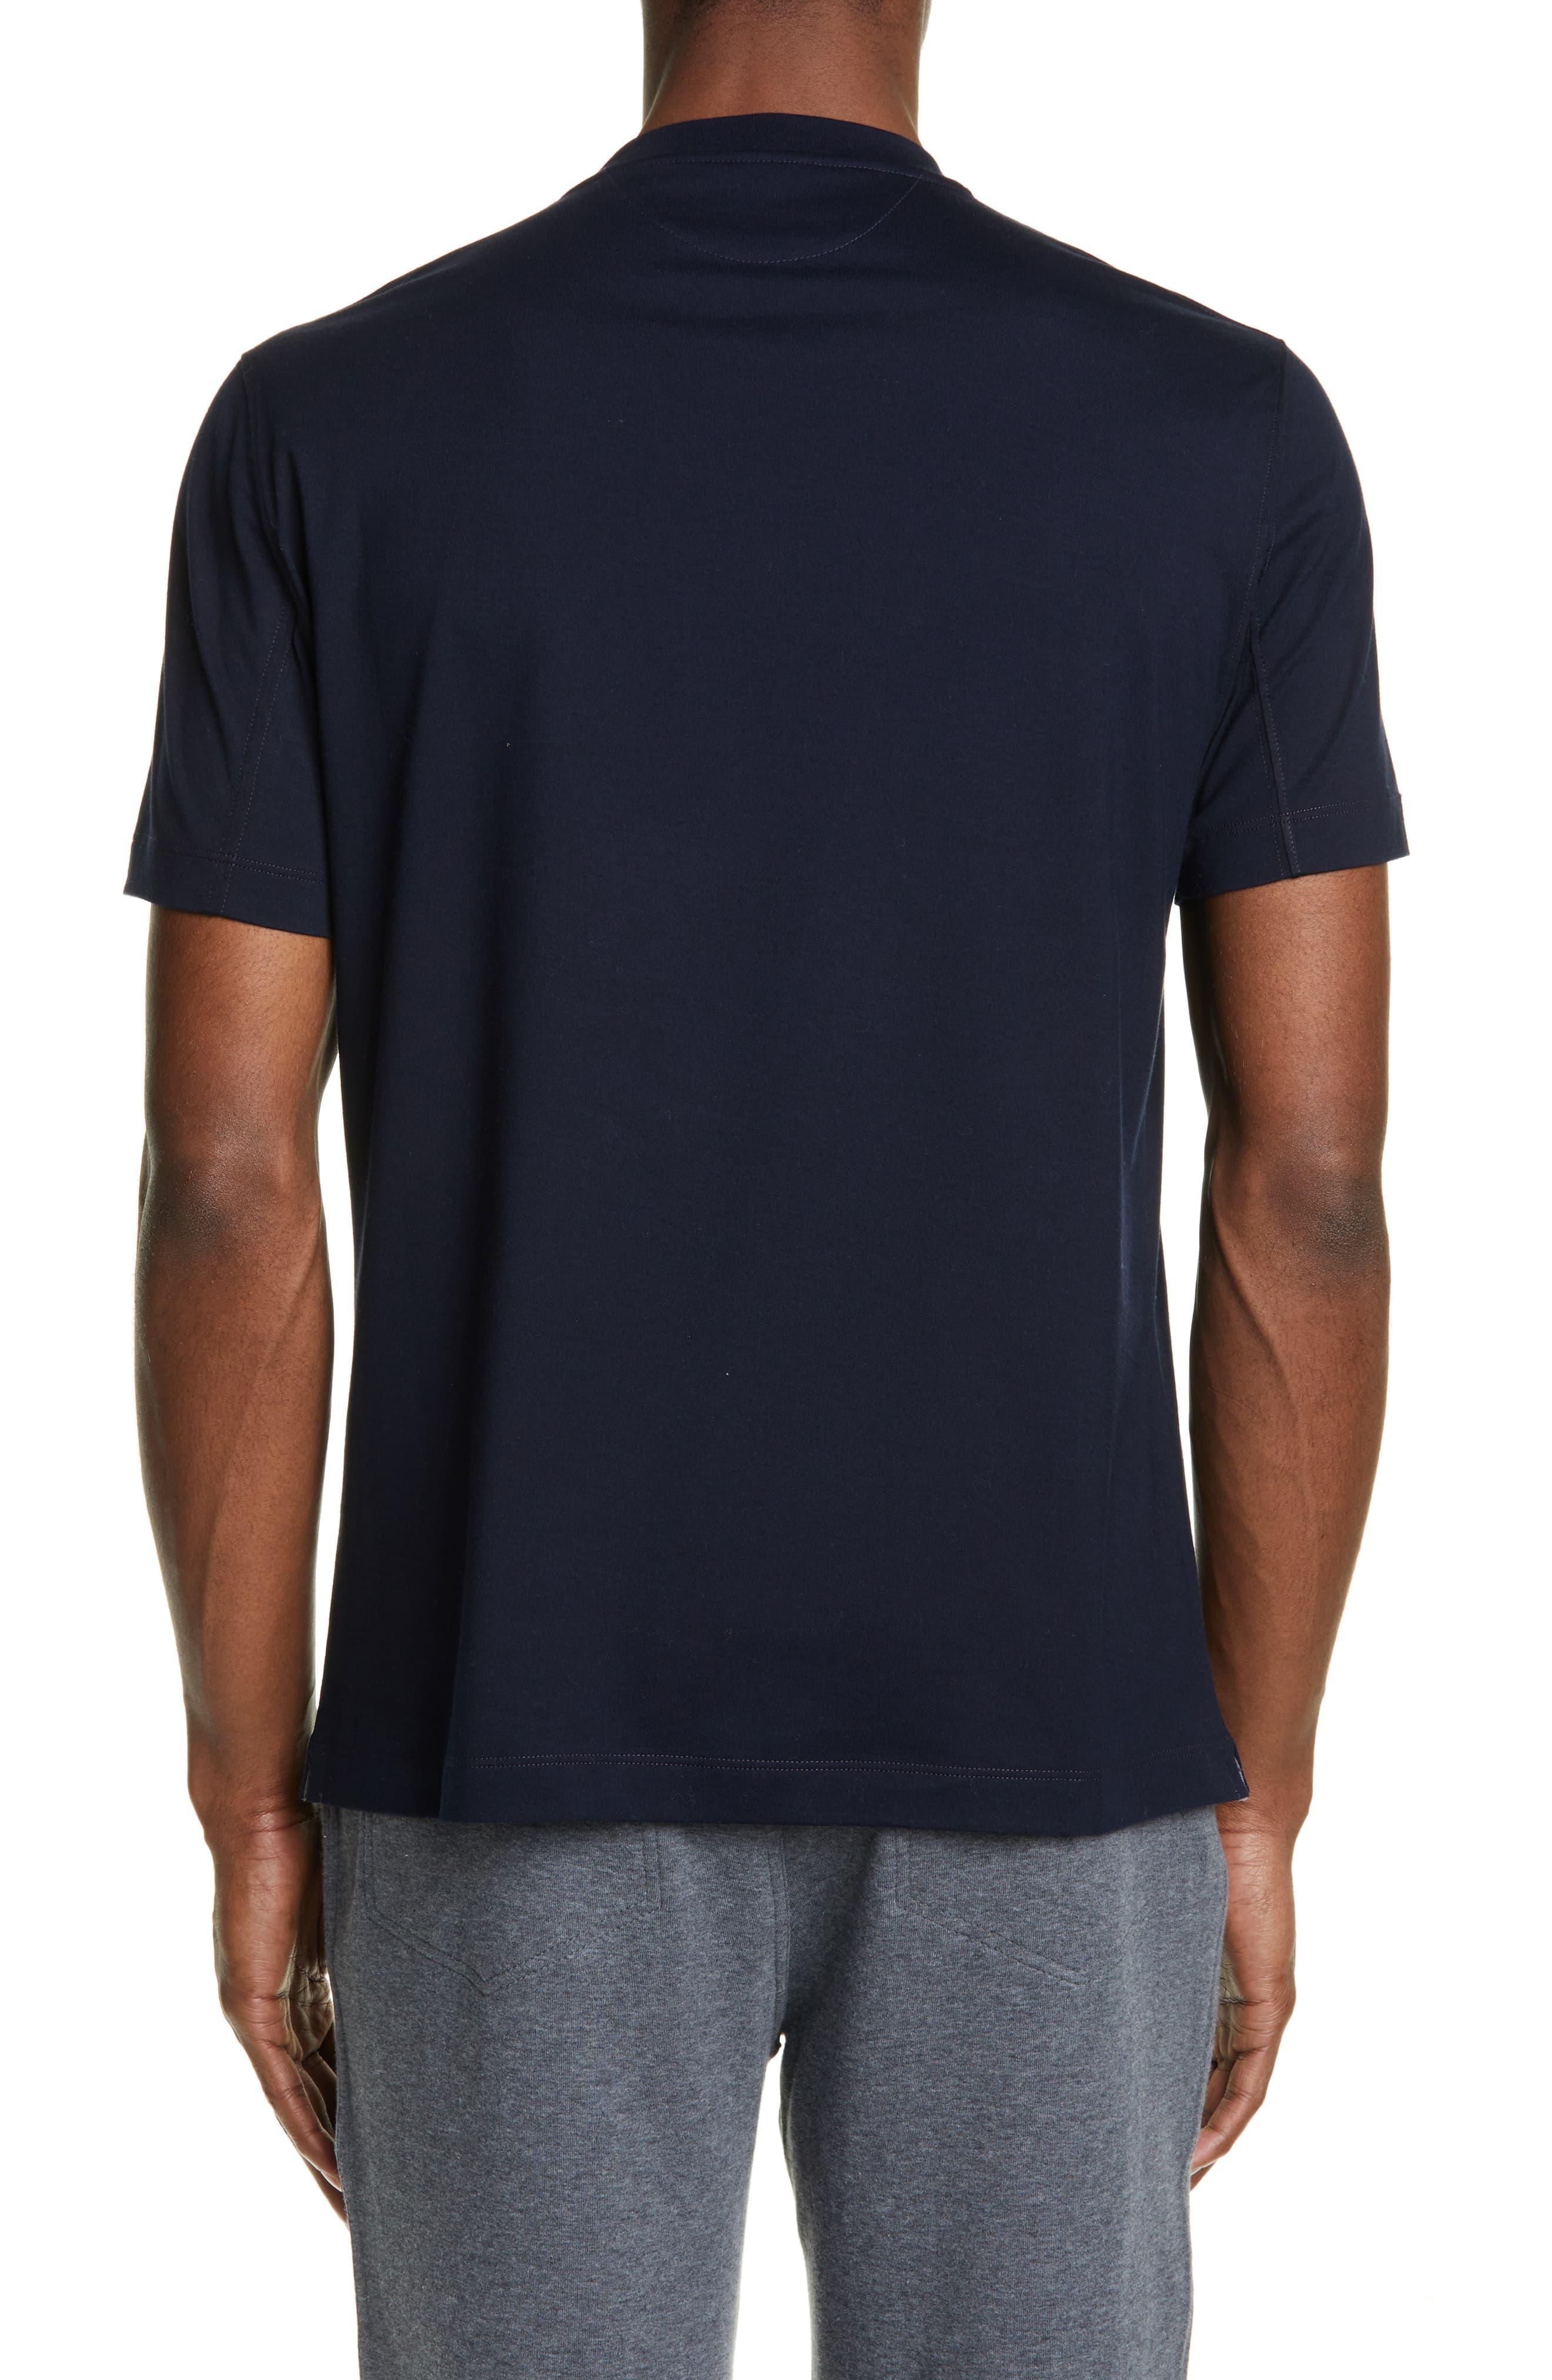 Brunello Cucinelli Cotton Crewneck T-shirt in Navy (Blue) for Men - Lyst